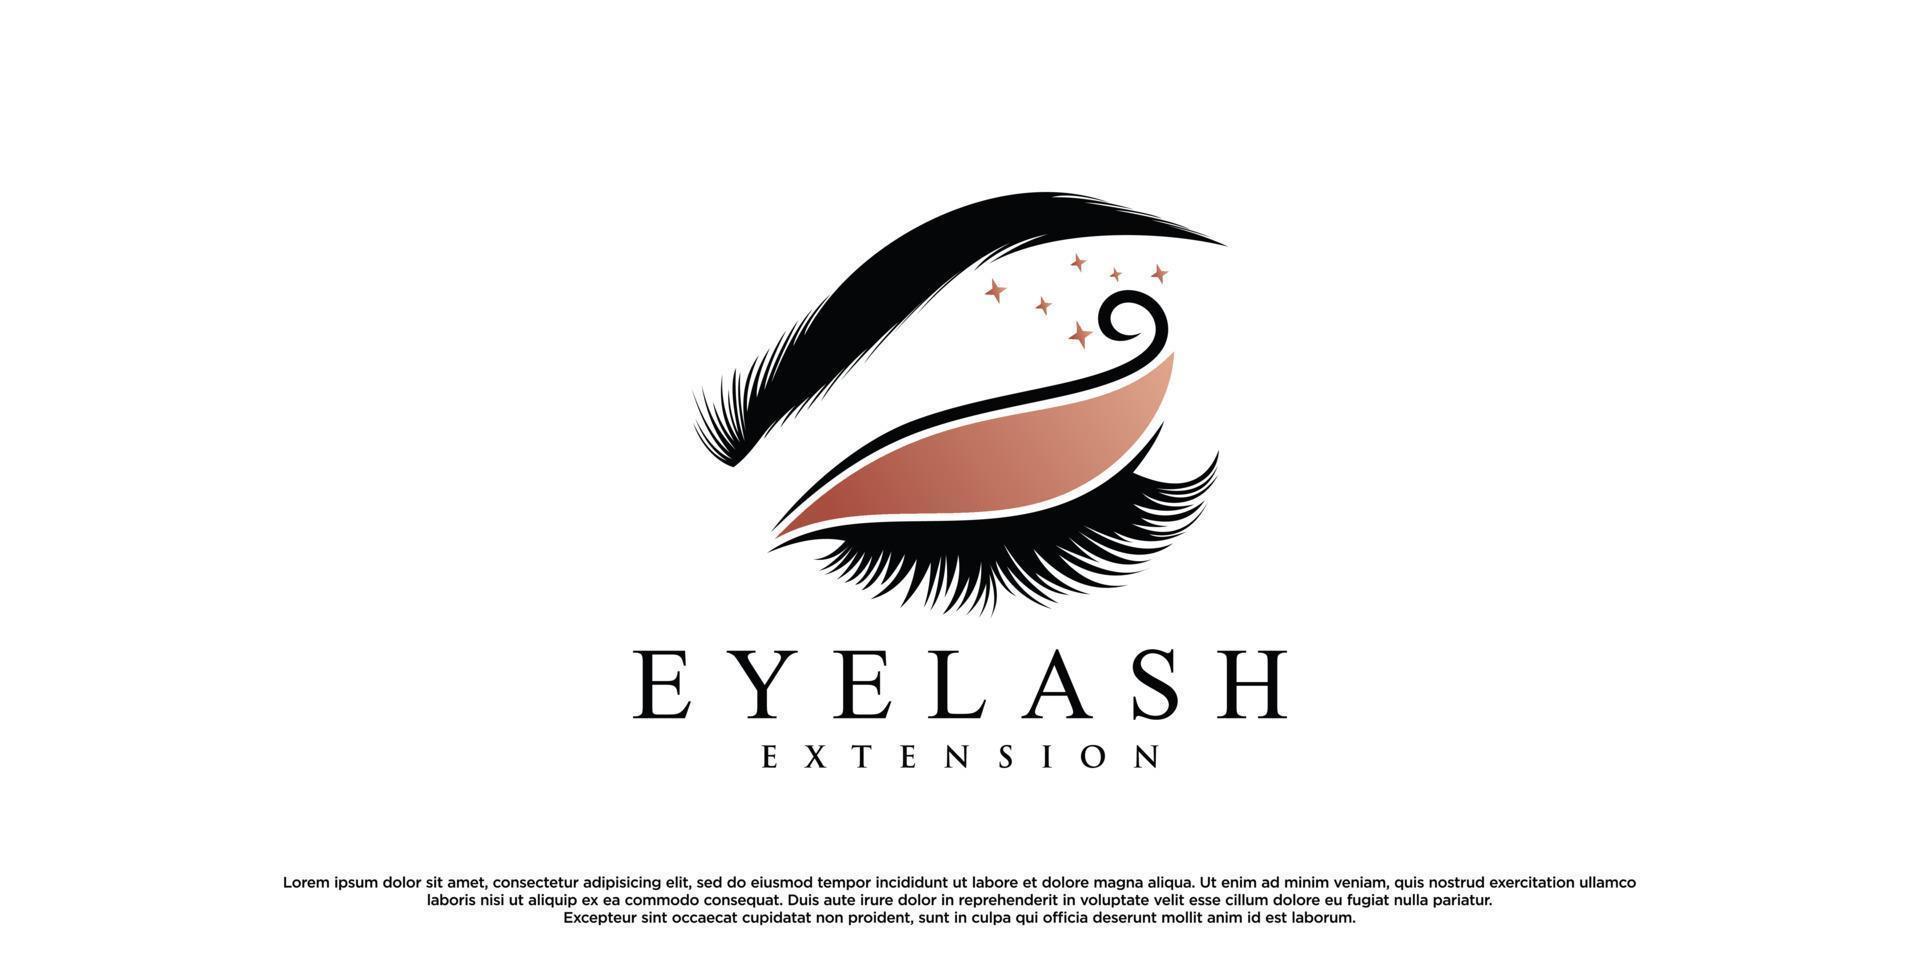 Eyelashes logo design vector illustration for beauty with creative modern concept Premium Vector